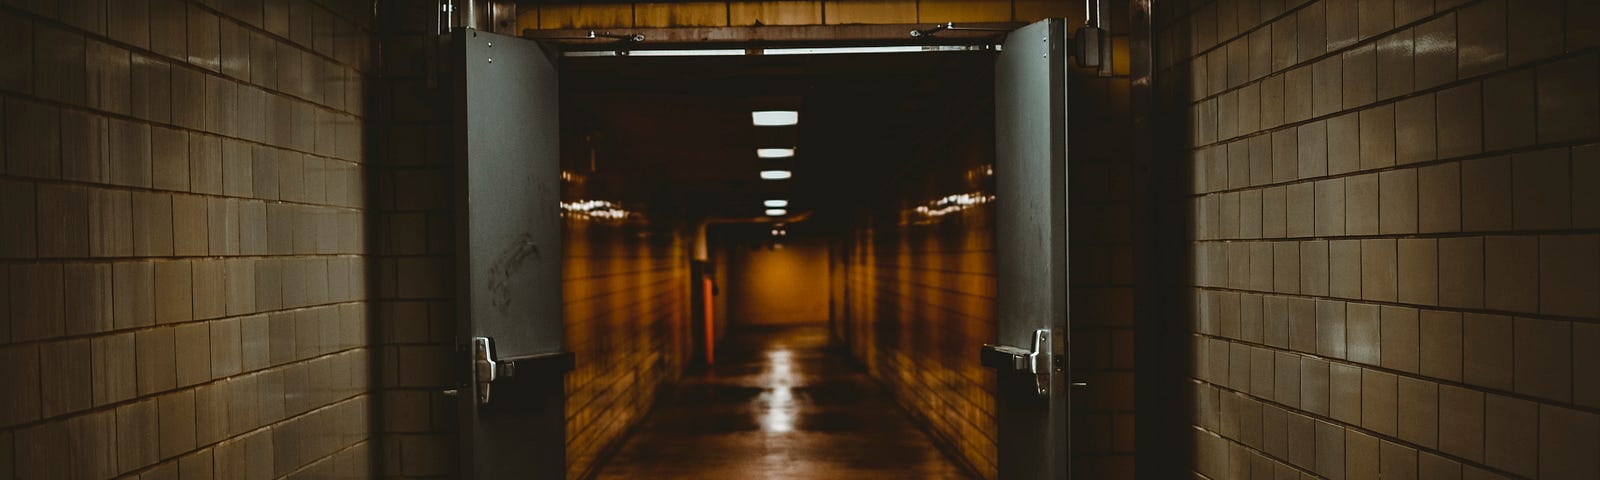 dark hallway with brick walls